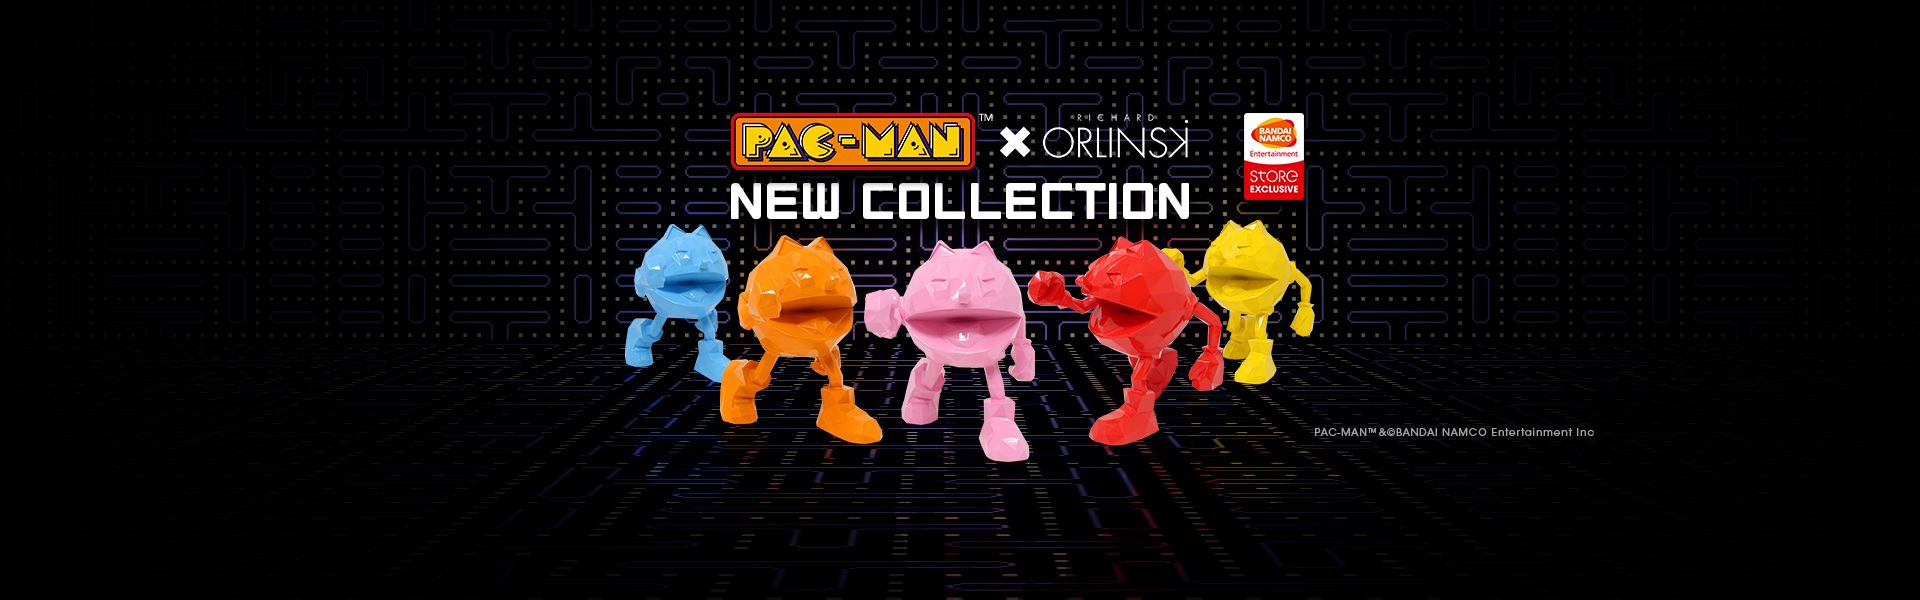 PAC-MAN x ORLINSKI : New Collection